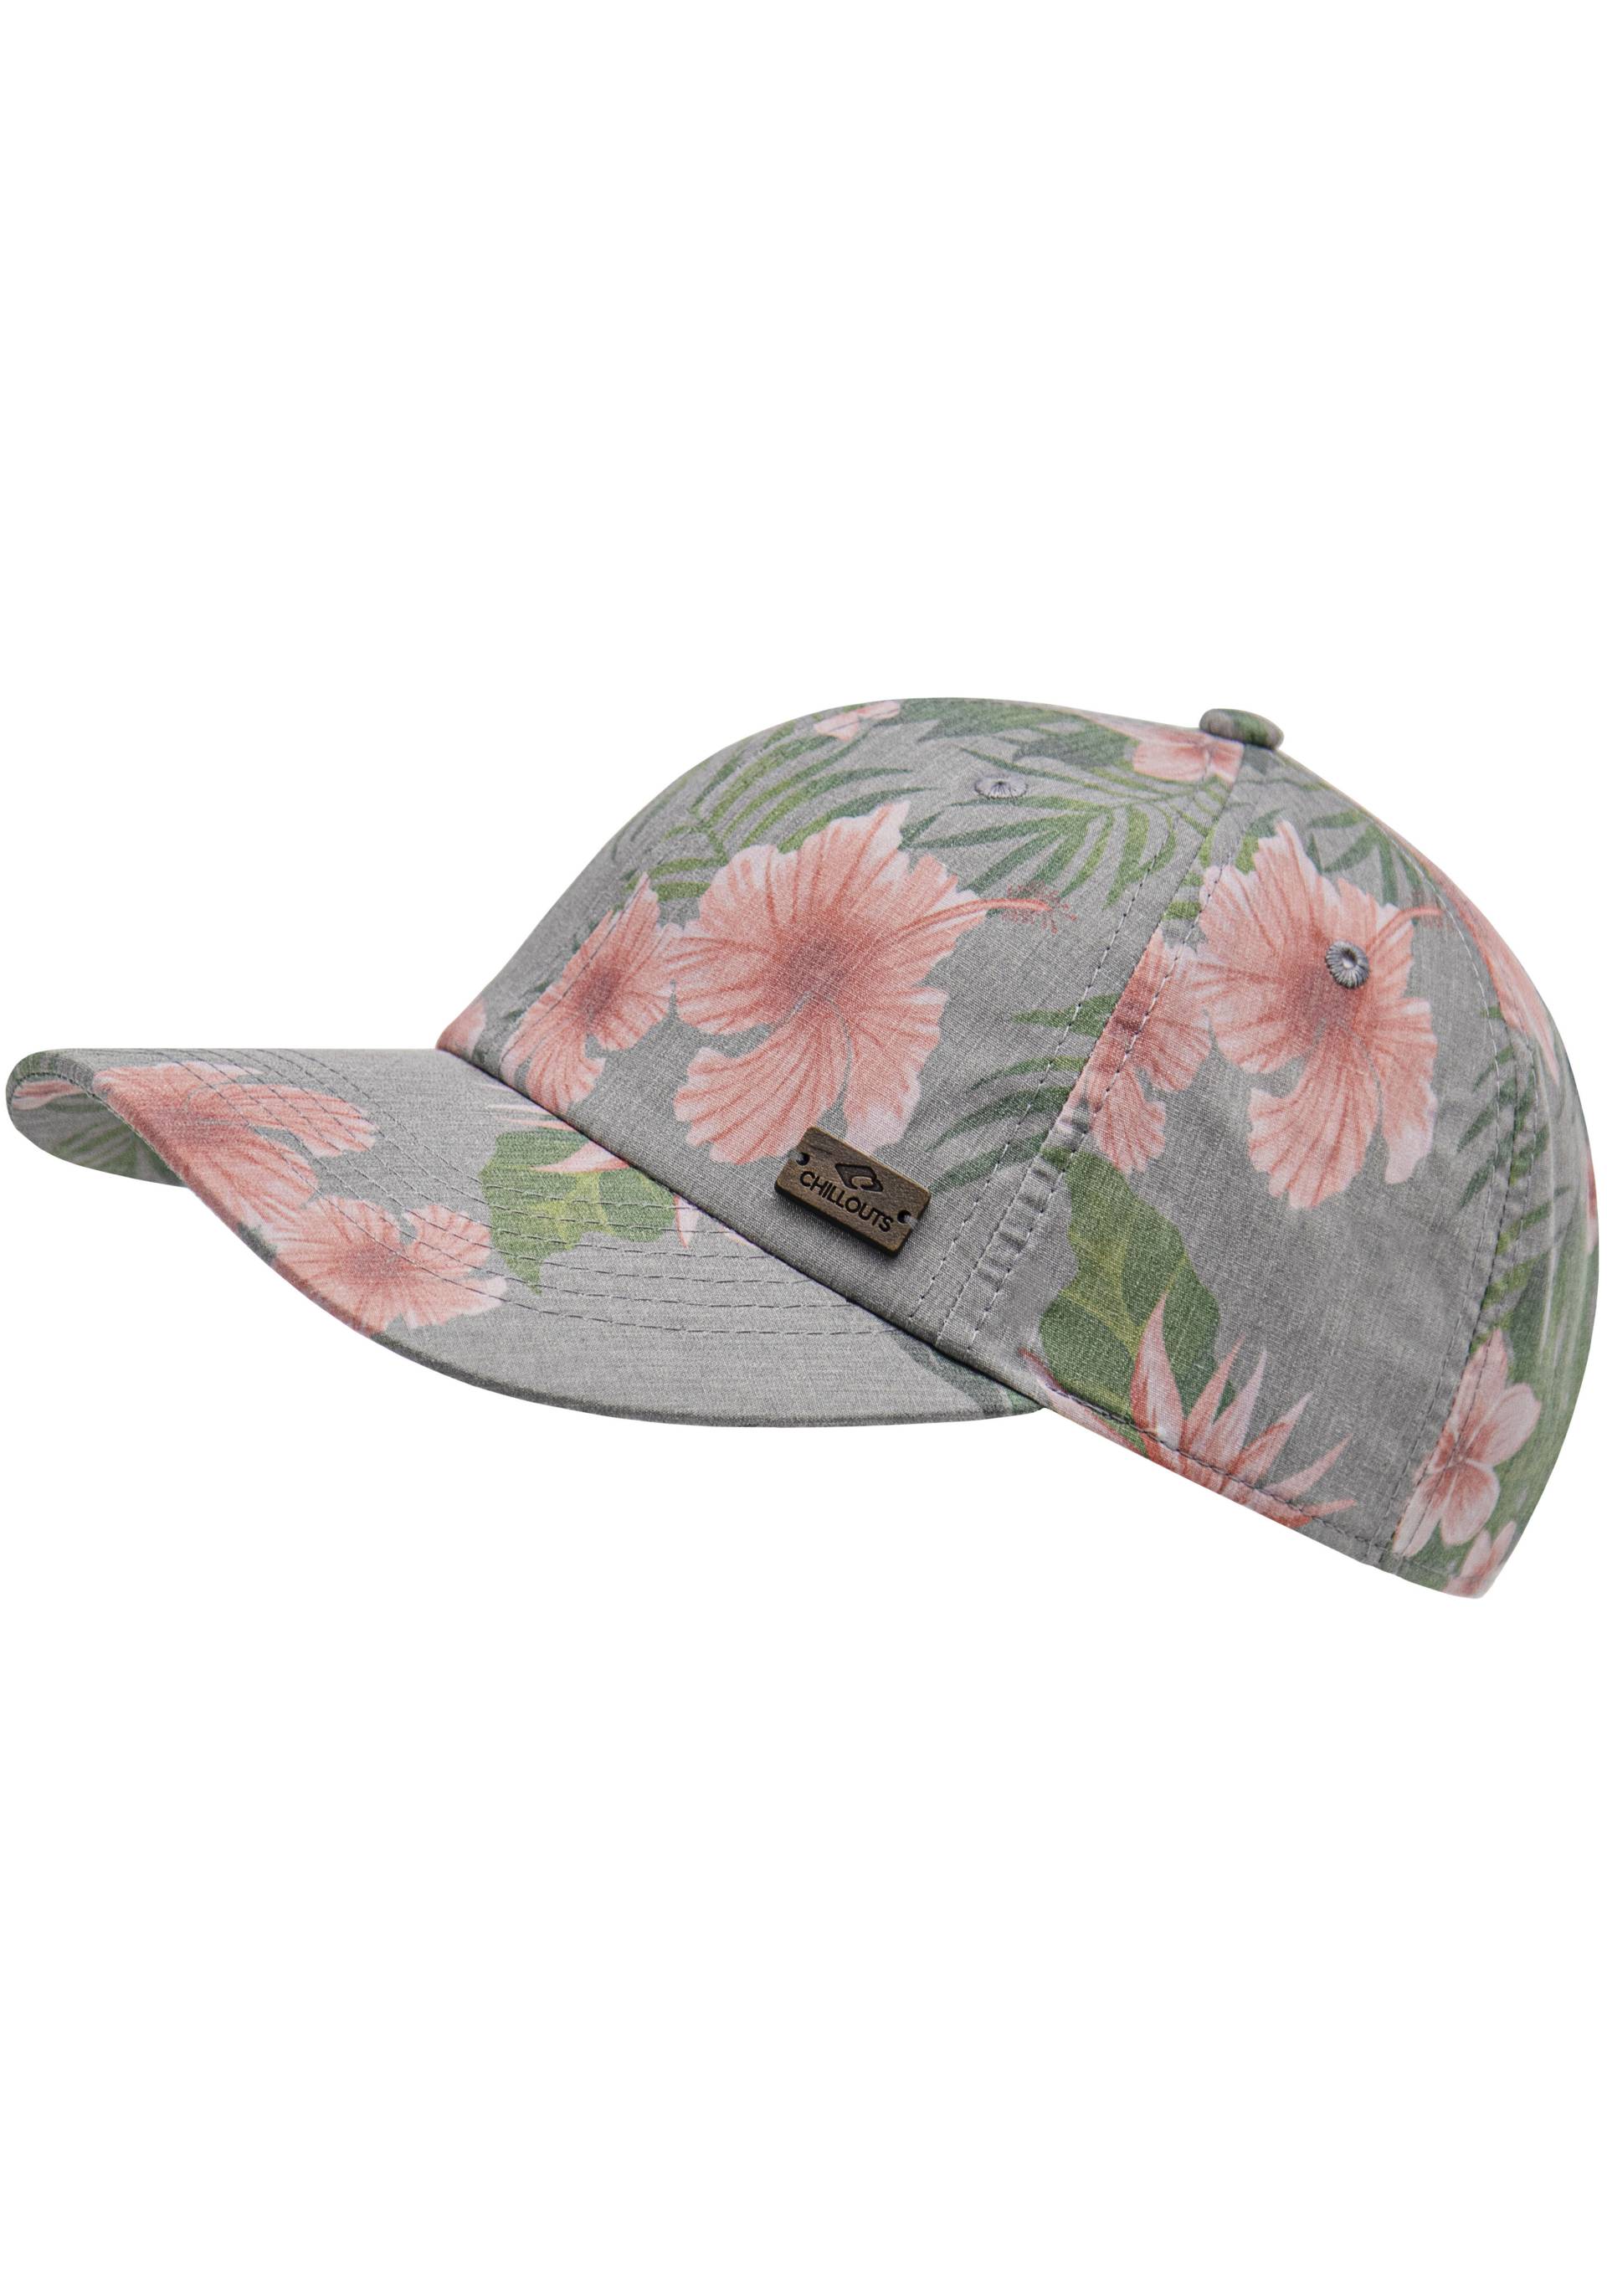 chillouts Baseball Cap, Mit Blumen-Print, Waimea Hat von chillouts